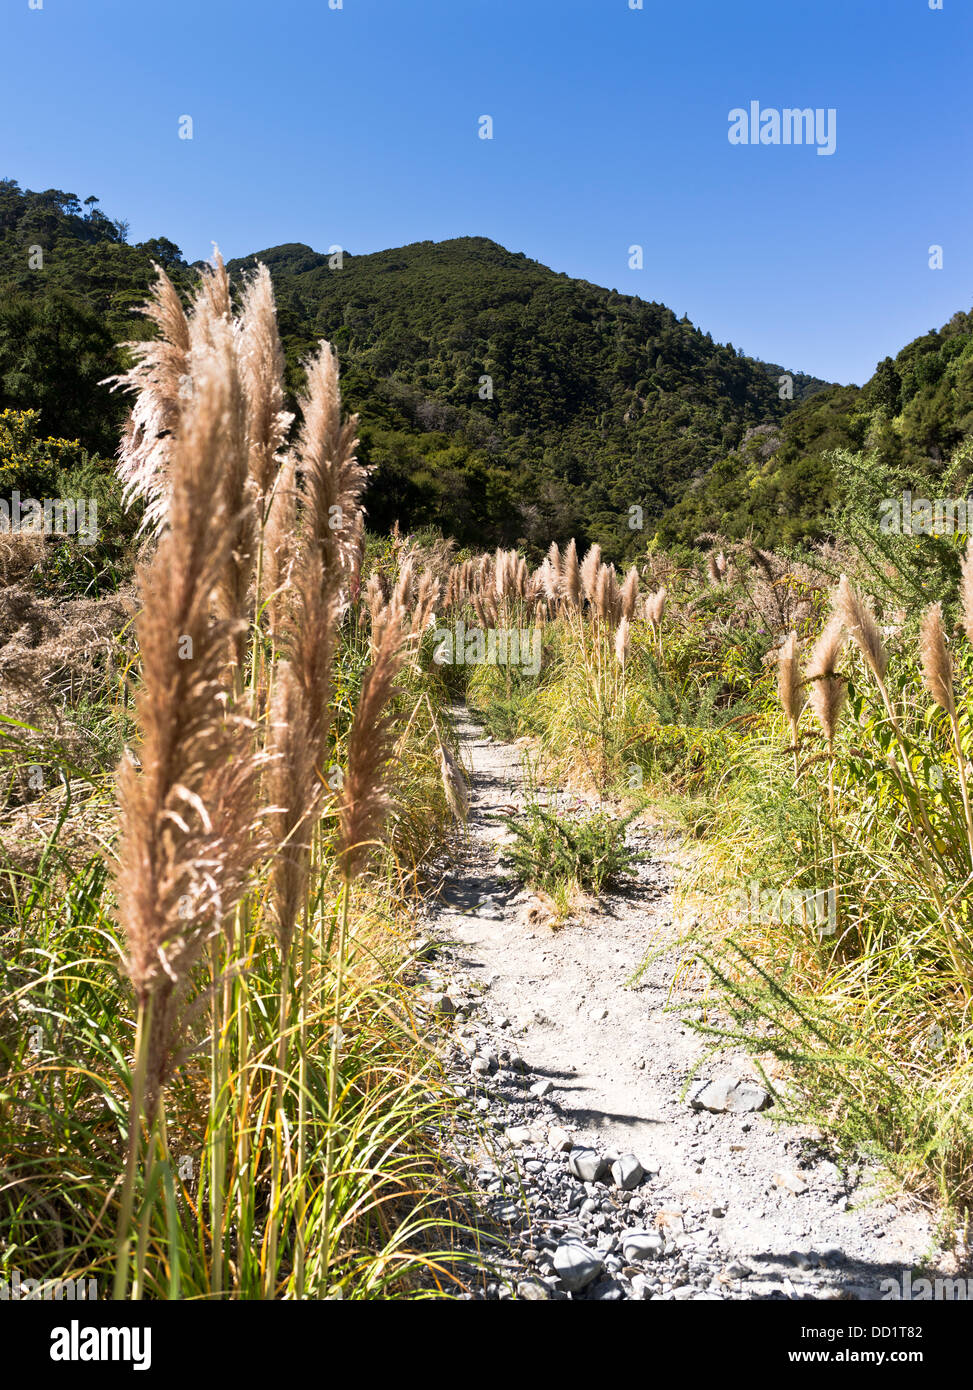 dh Toetoe AUSTRODERIA FLORA New Zealand Toi Toi grass alongside footpath Stock Photo